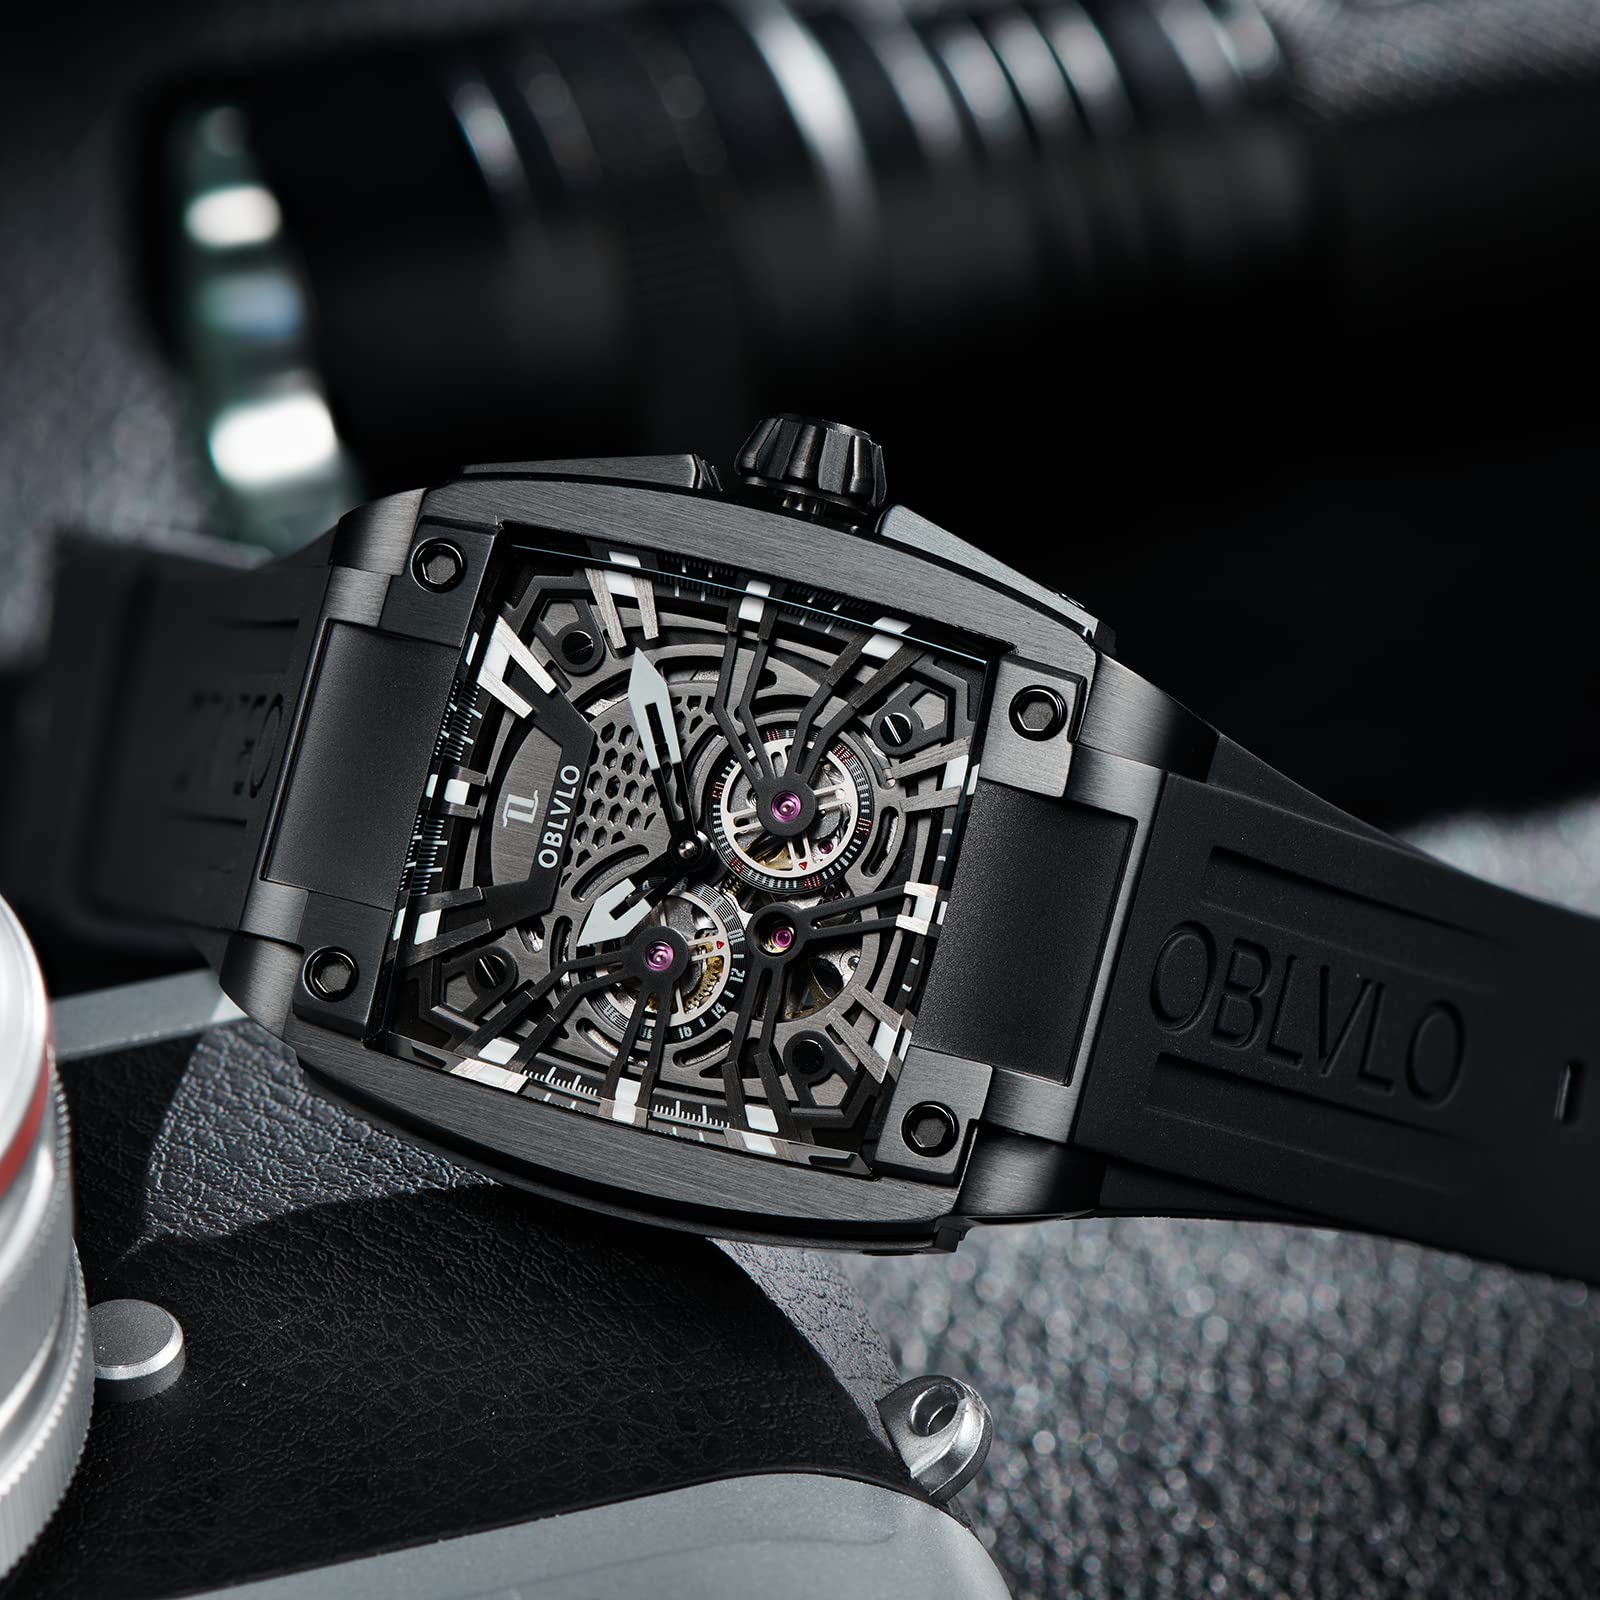 OBLVLO Herren Super Luminous Automatik Uhren Sport Luxus Uhr Quadratische Skelett Mechanische Gummi Armband Uhren GM